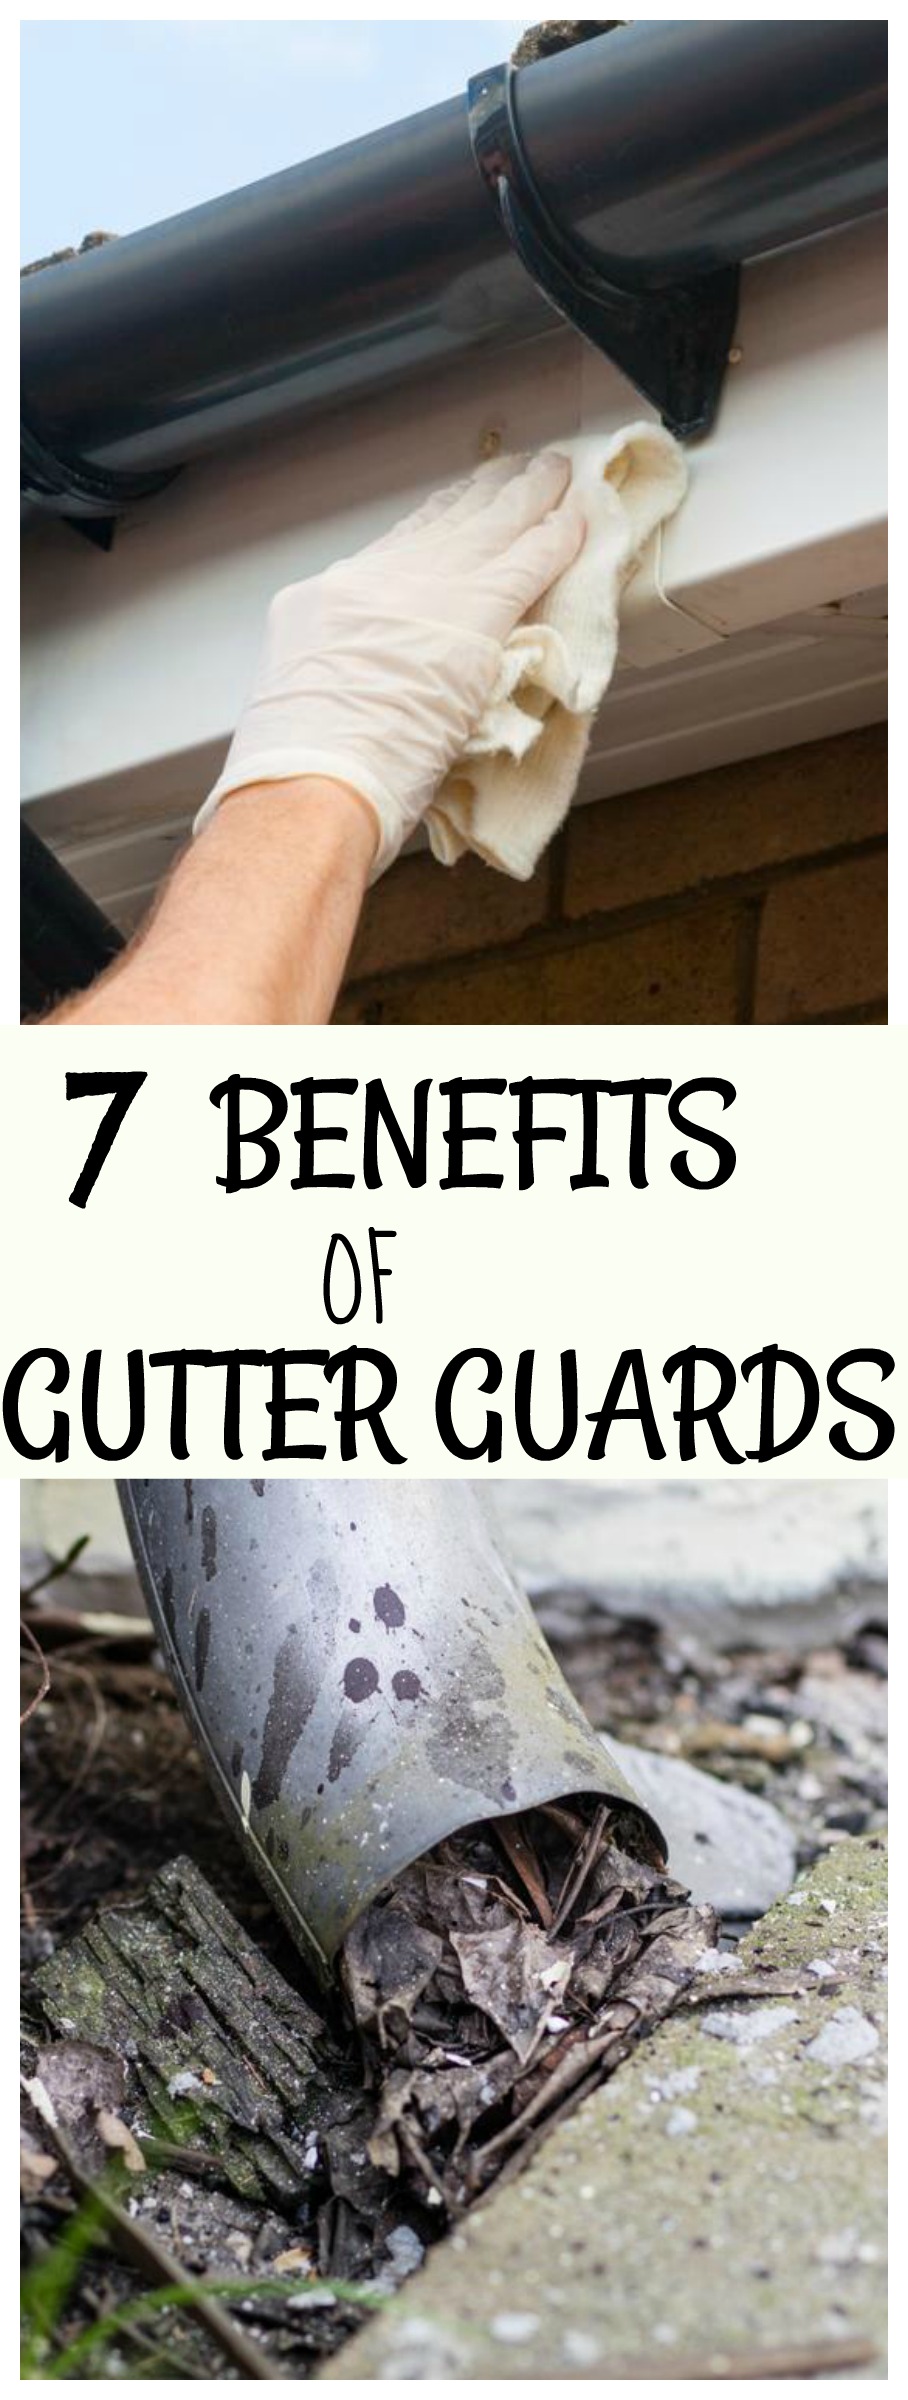 7 Benefits of Gutter Guards